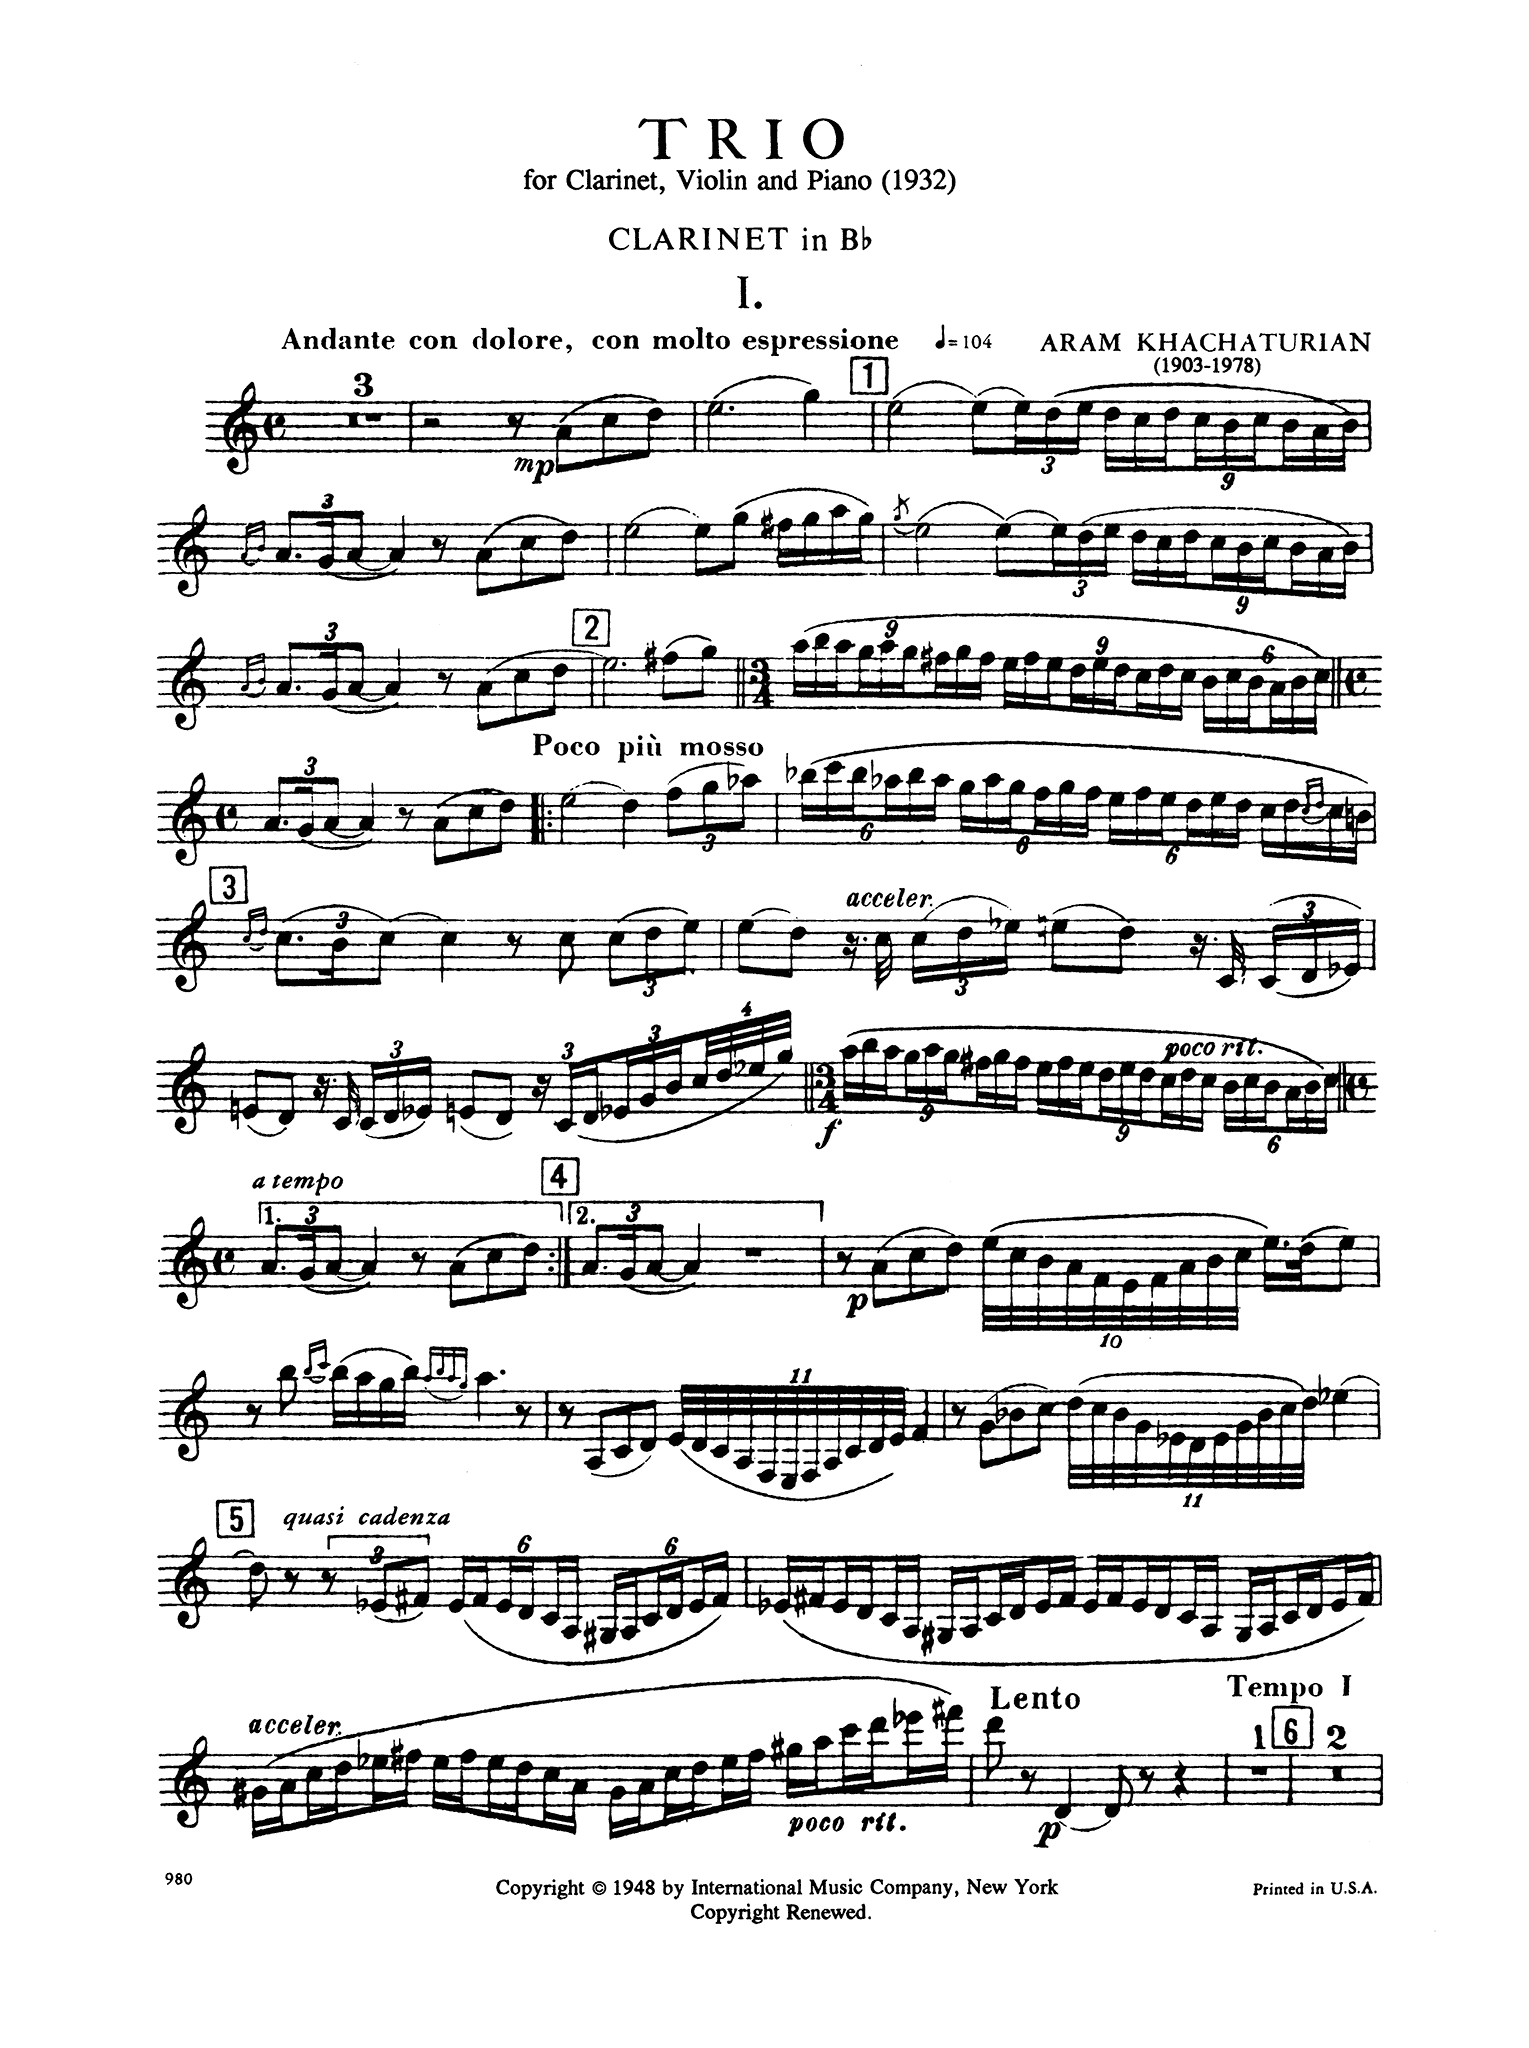 Khachaturian Trio Clarinet part